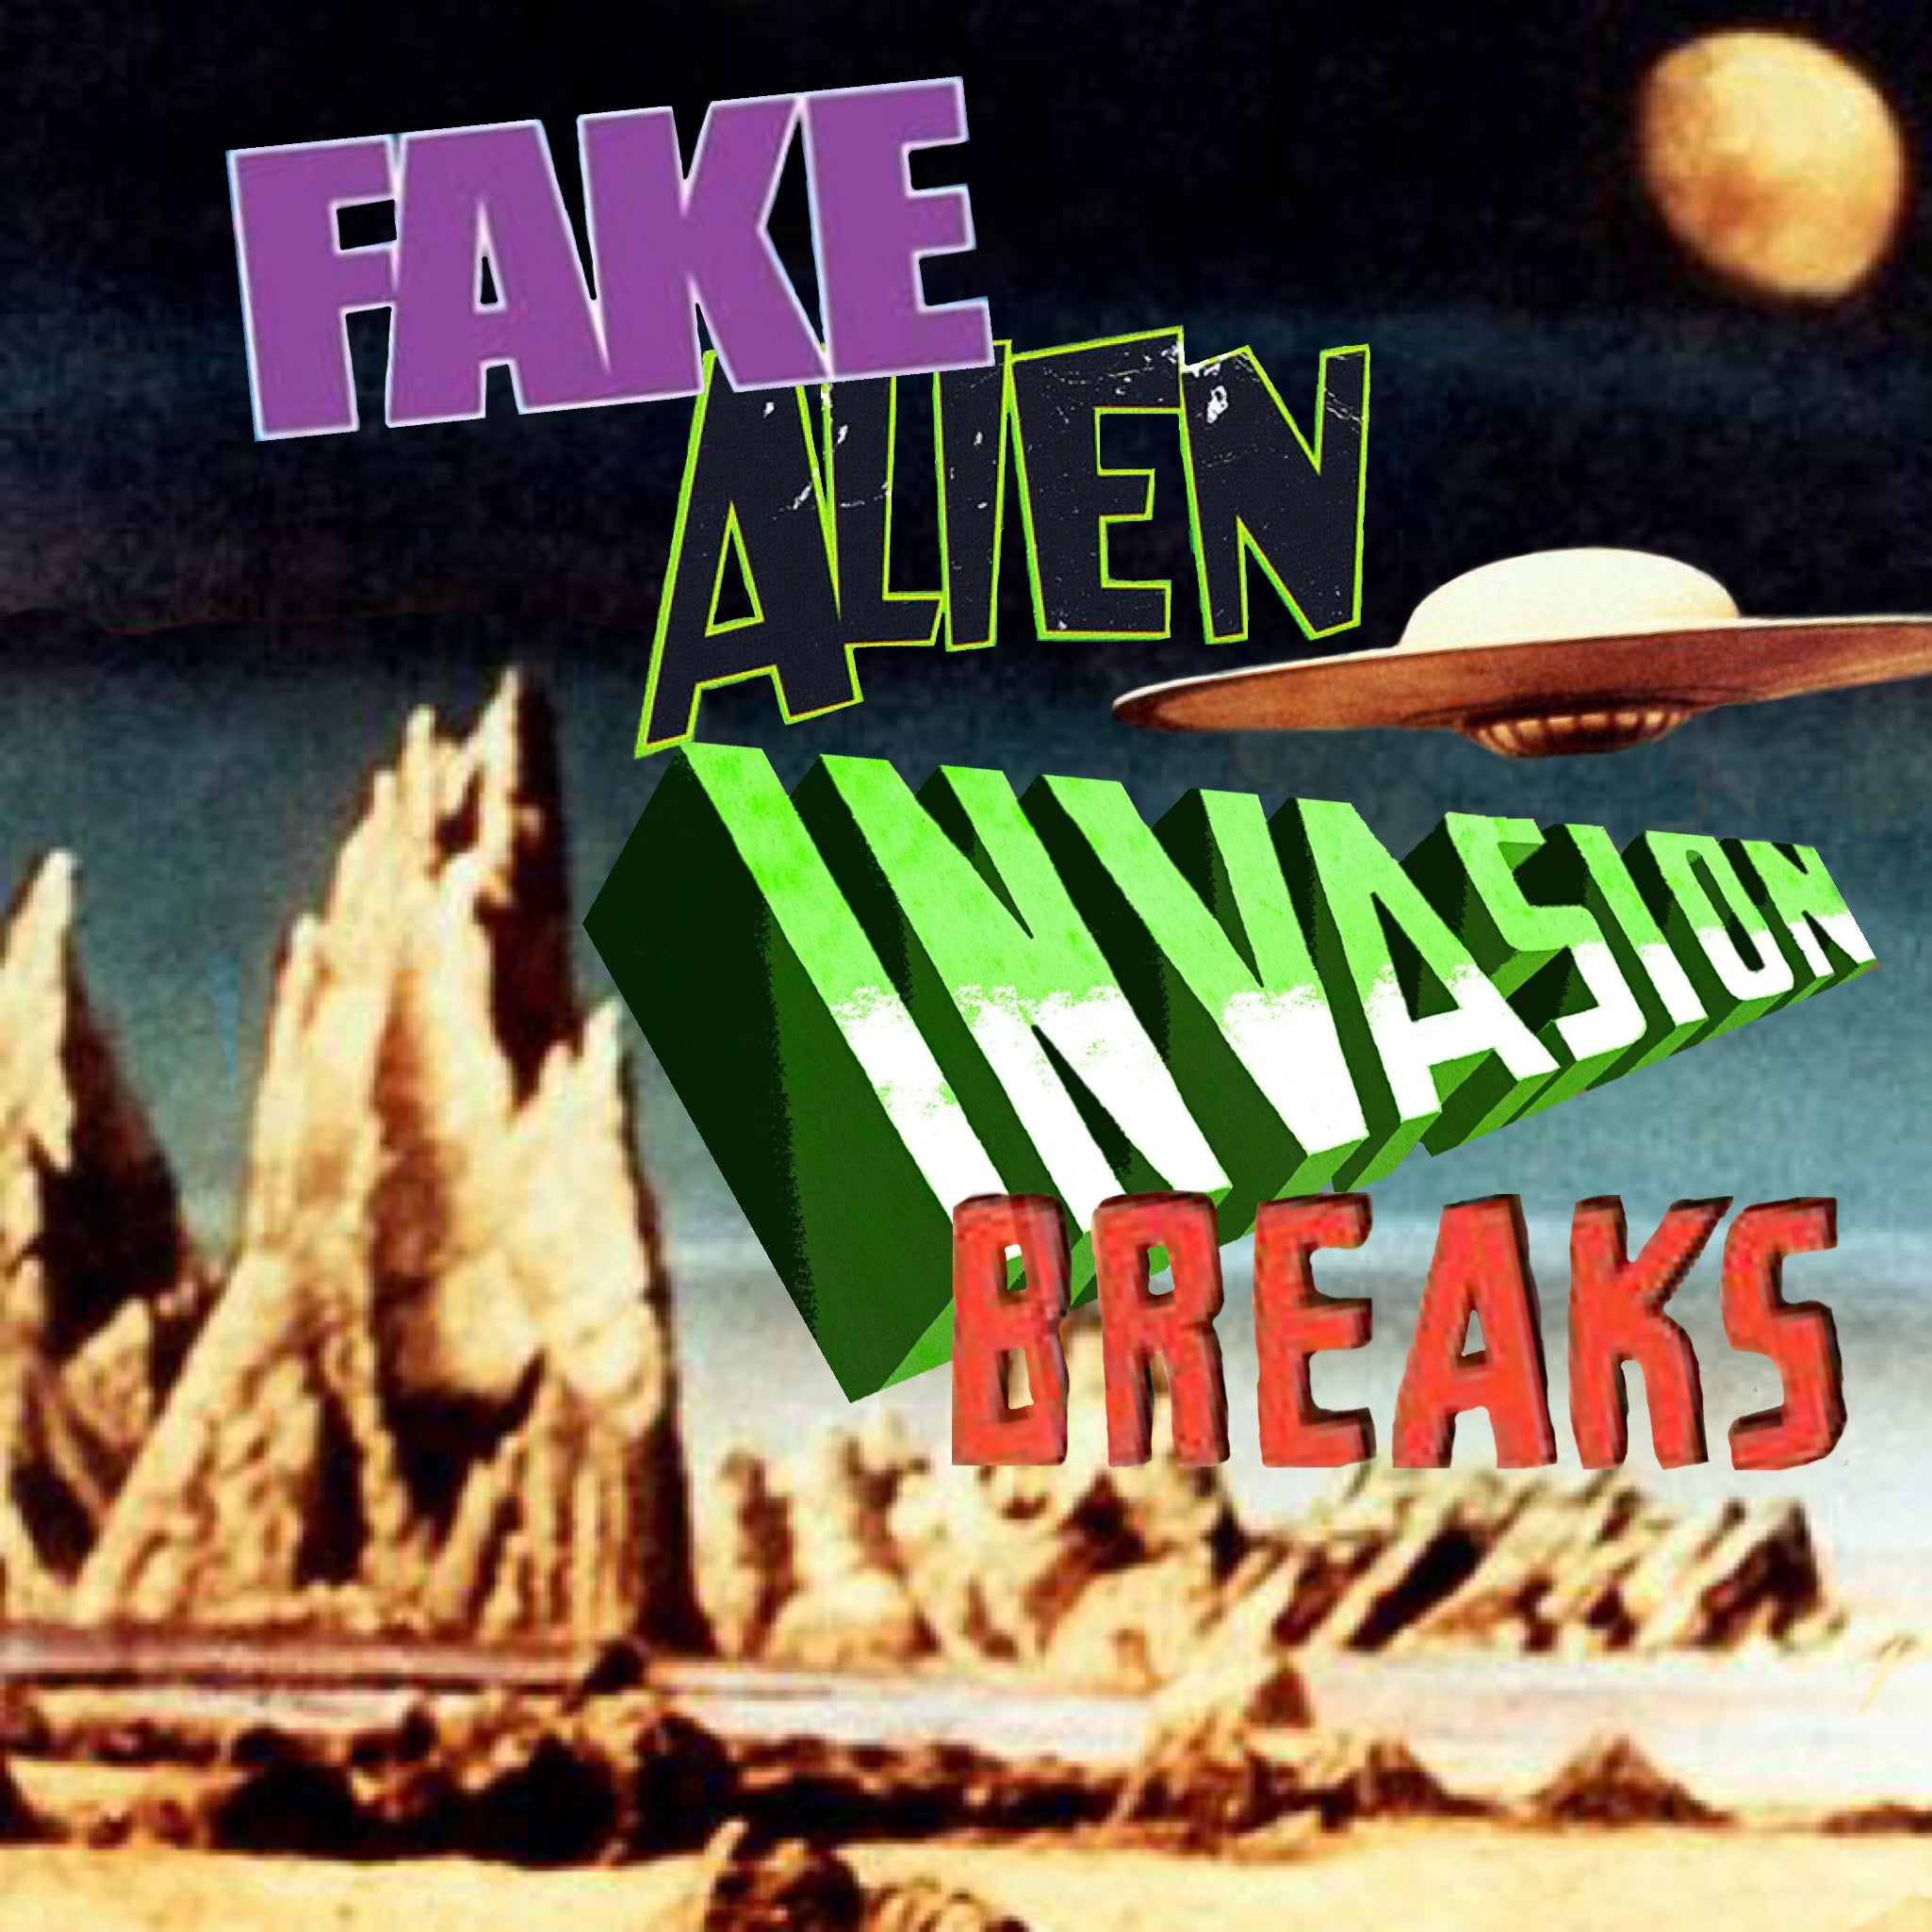 1 FAKE ALIEN INVASION BREAKS! Unreleased Dirt Style Record Digital release!